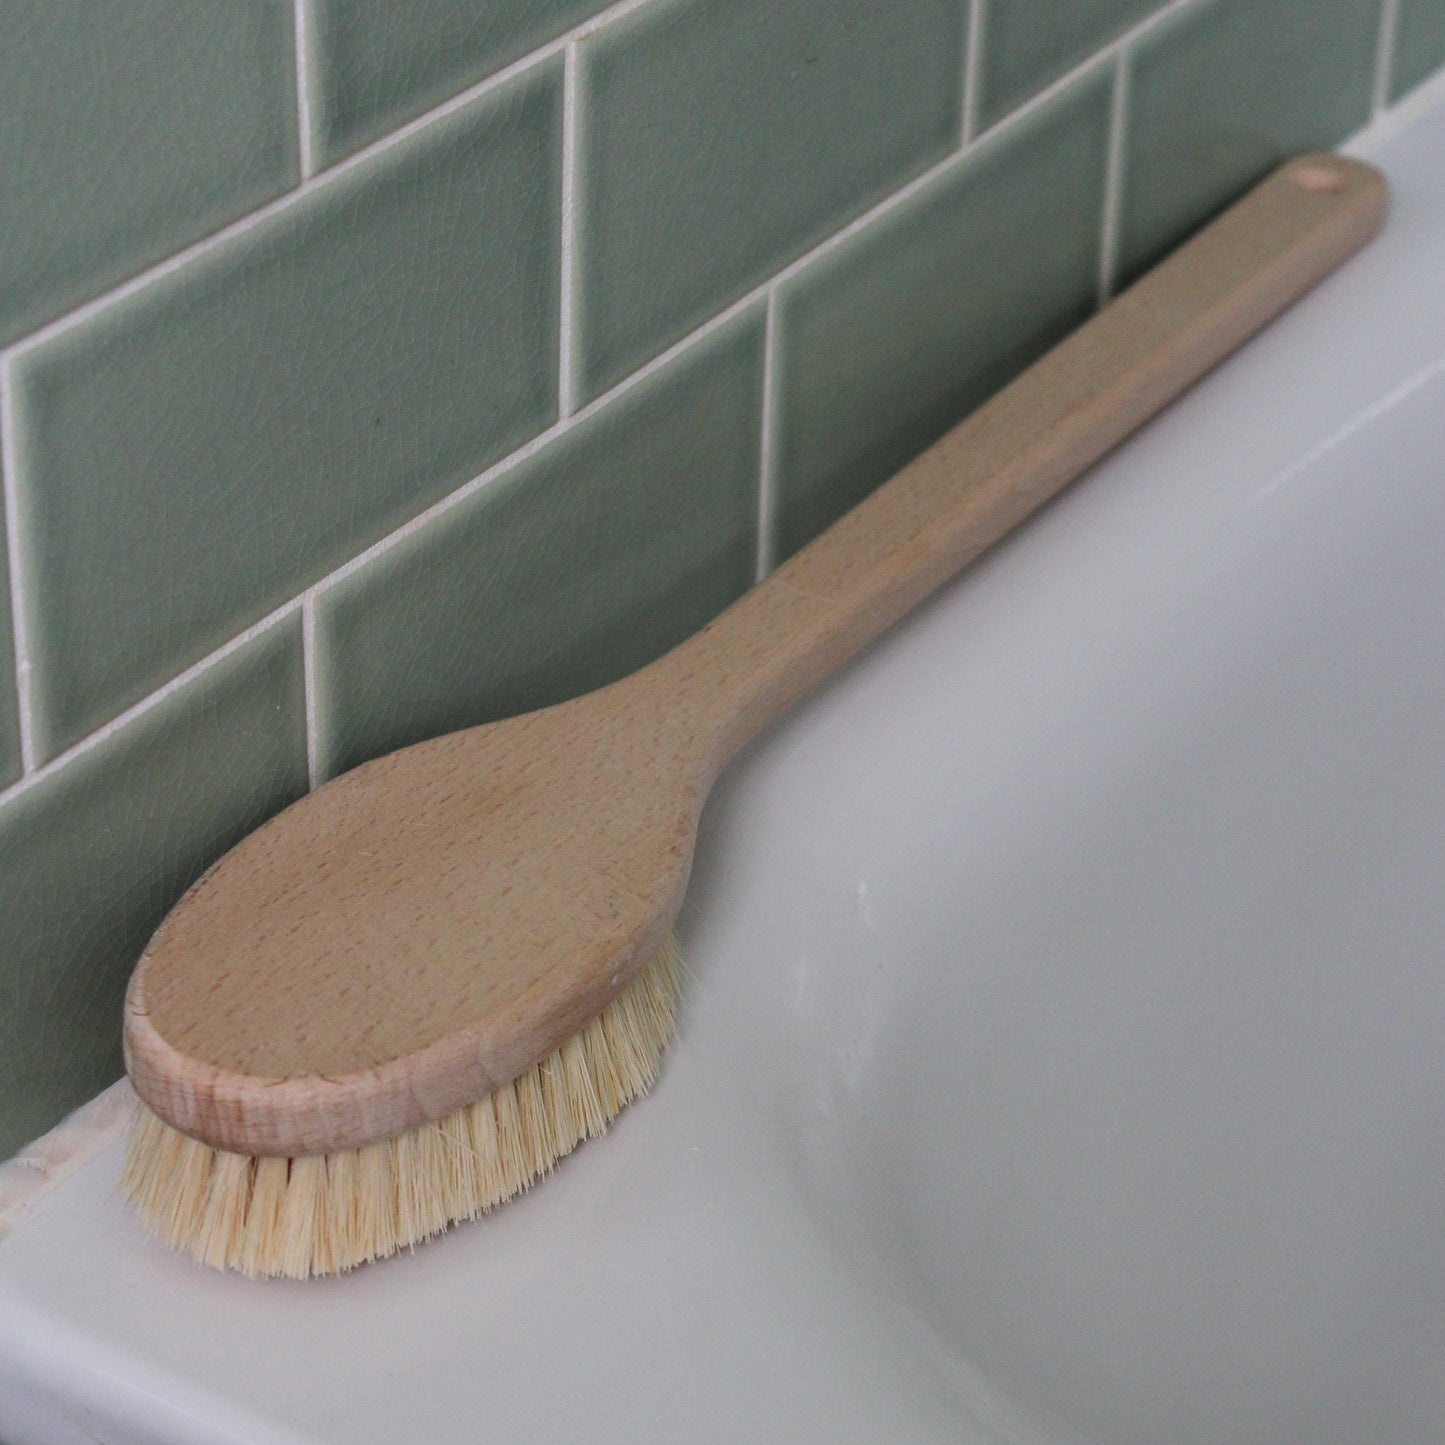 Firm Bath Brush Lifestyle